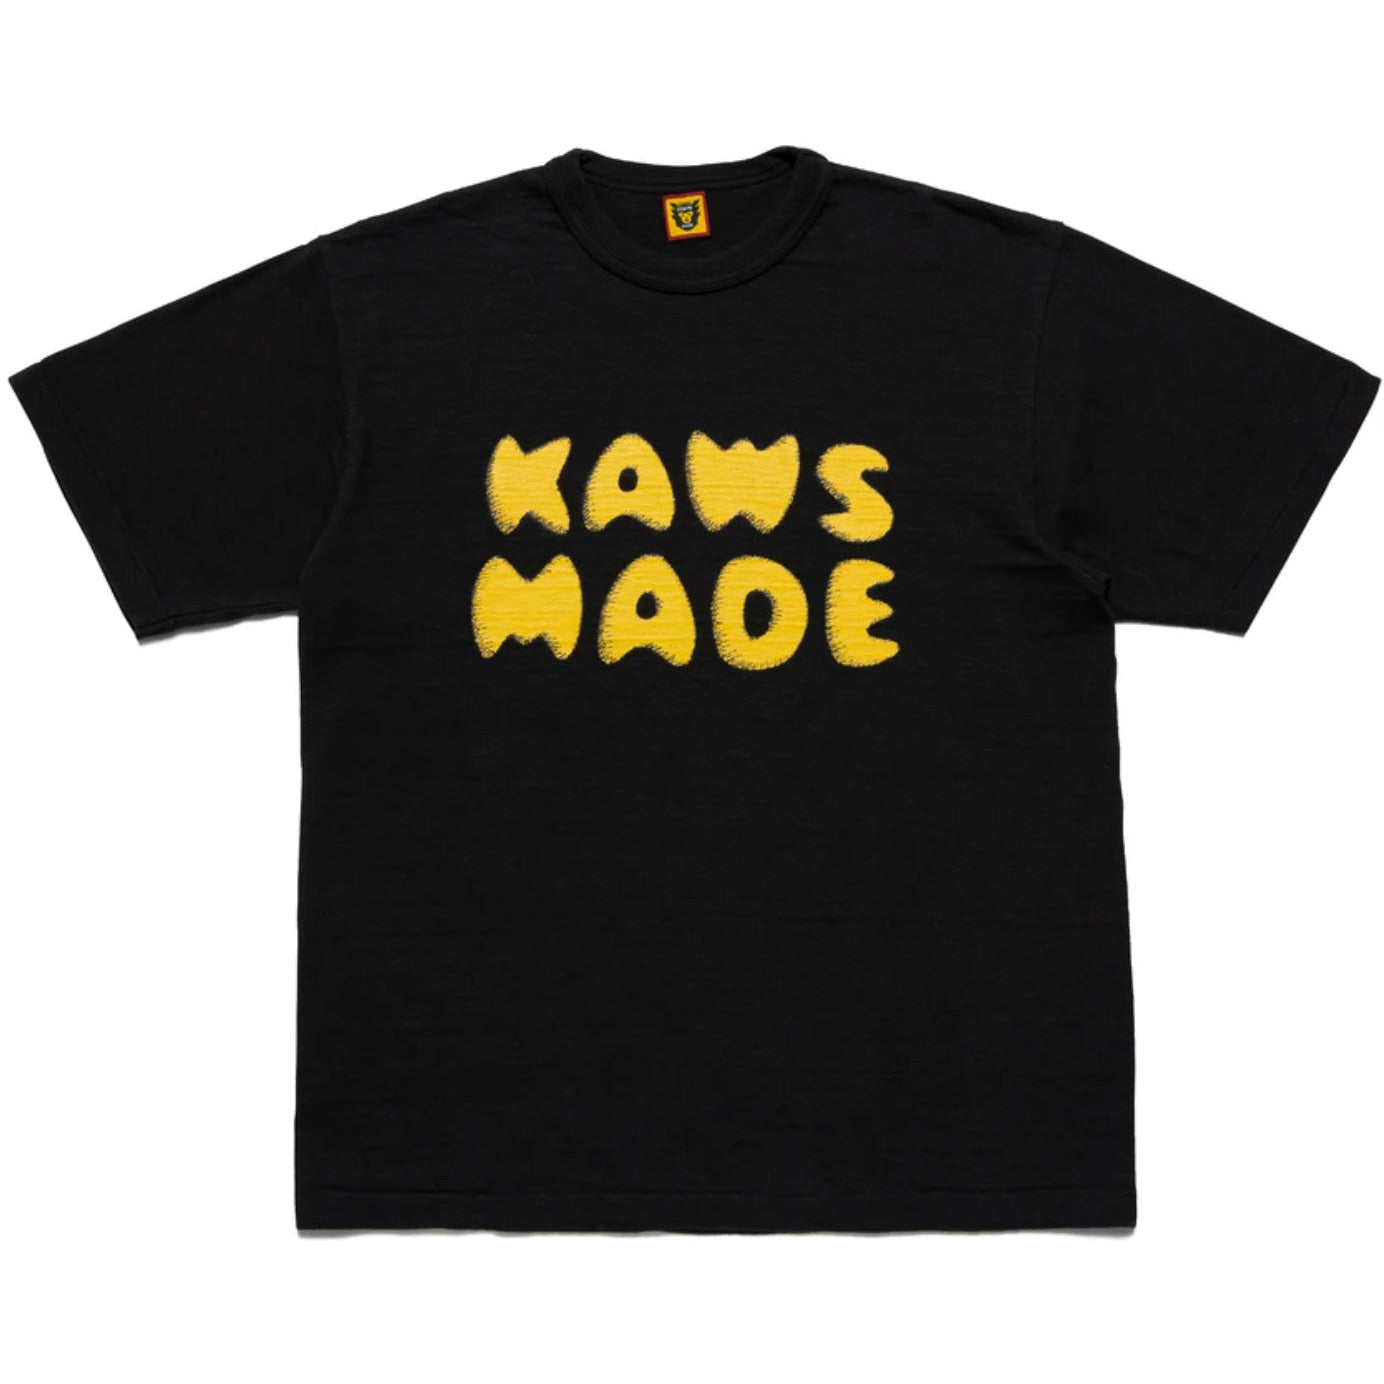 Human Made x KAWS #3 T-shirt